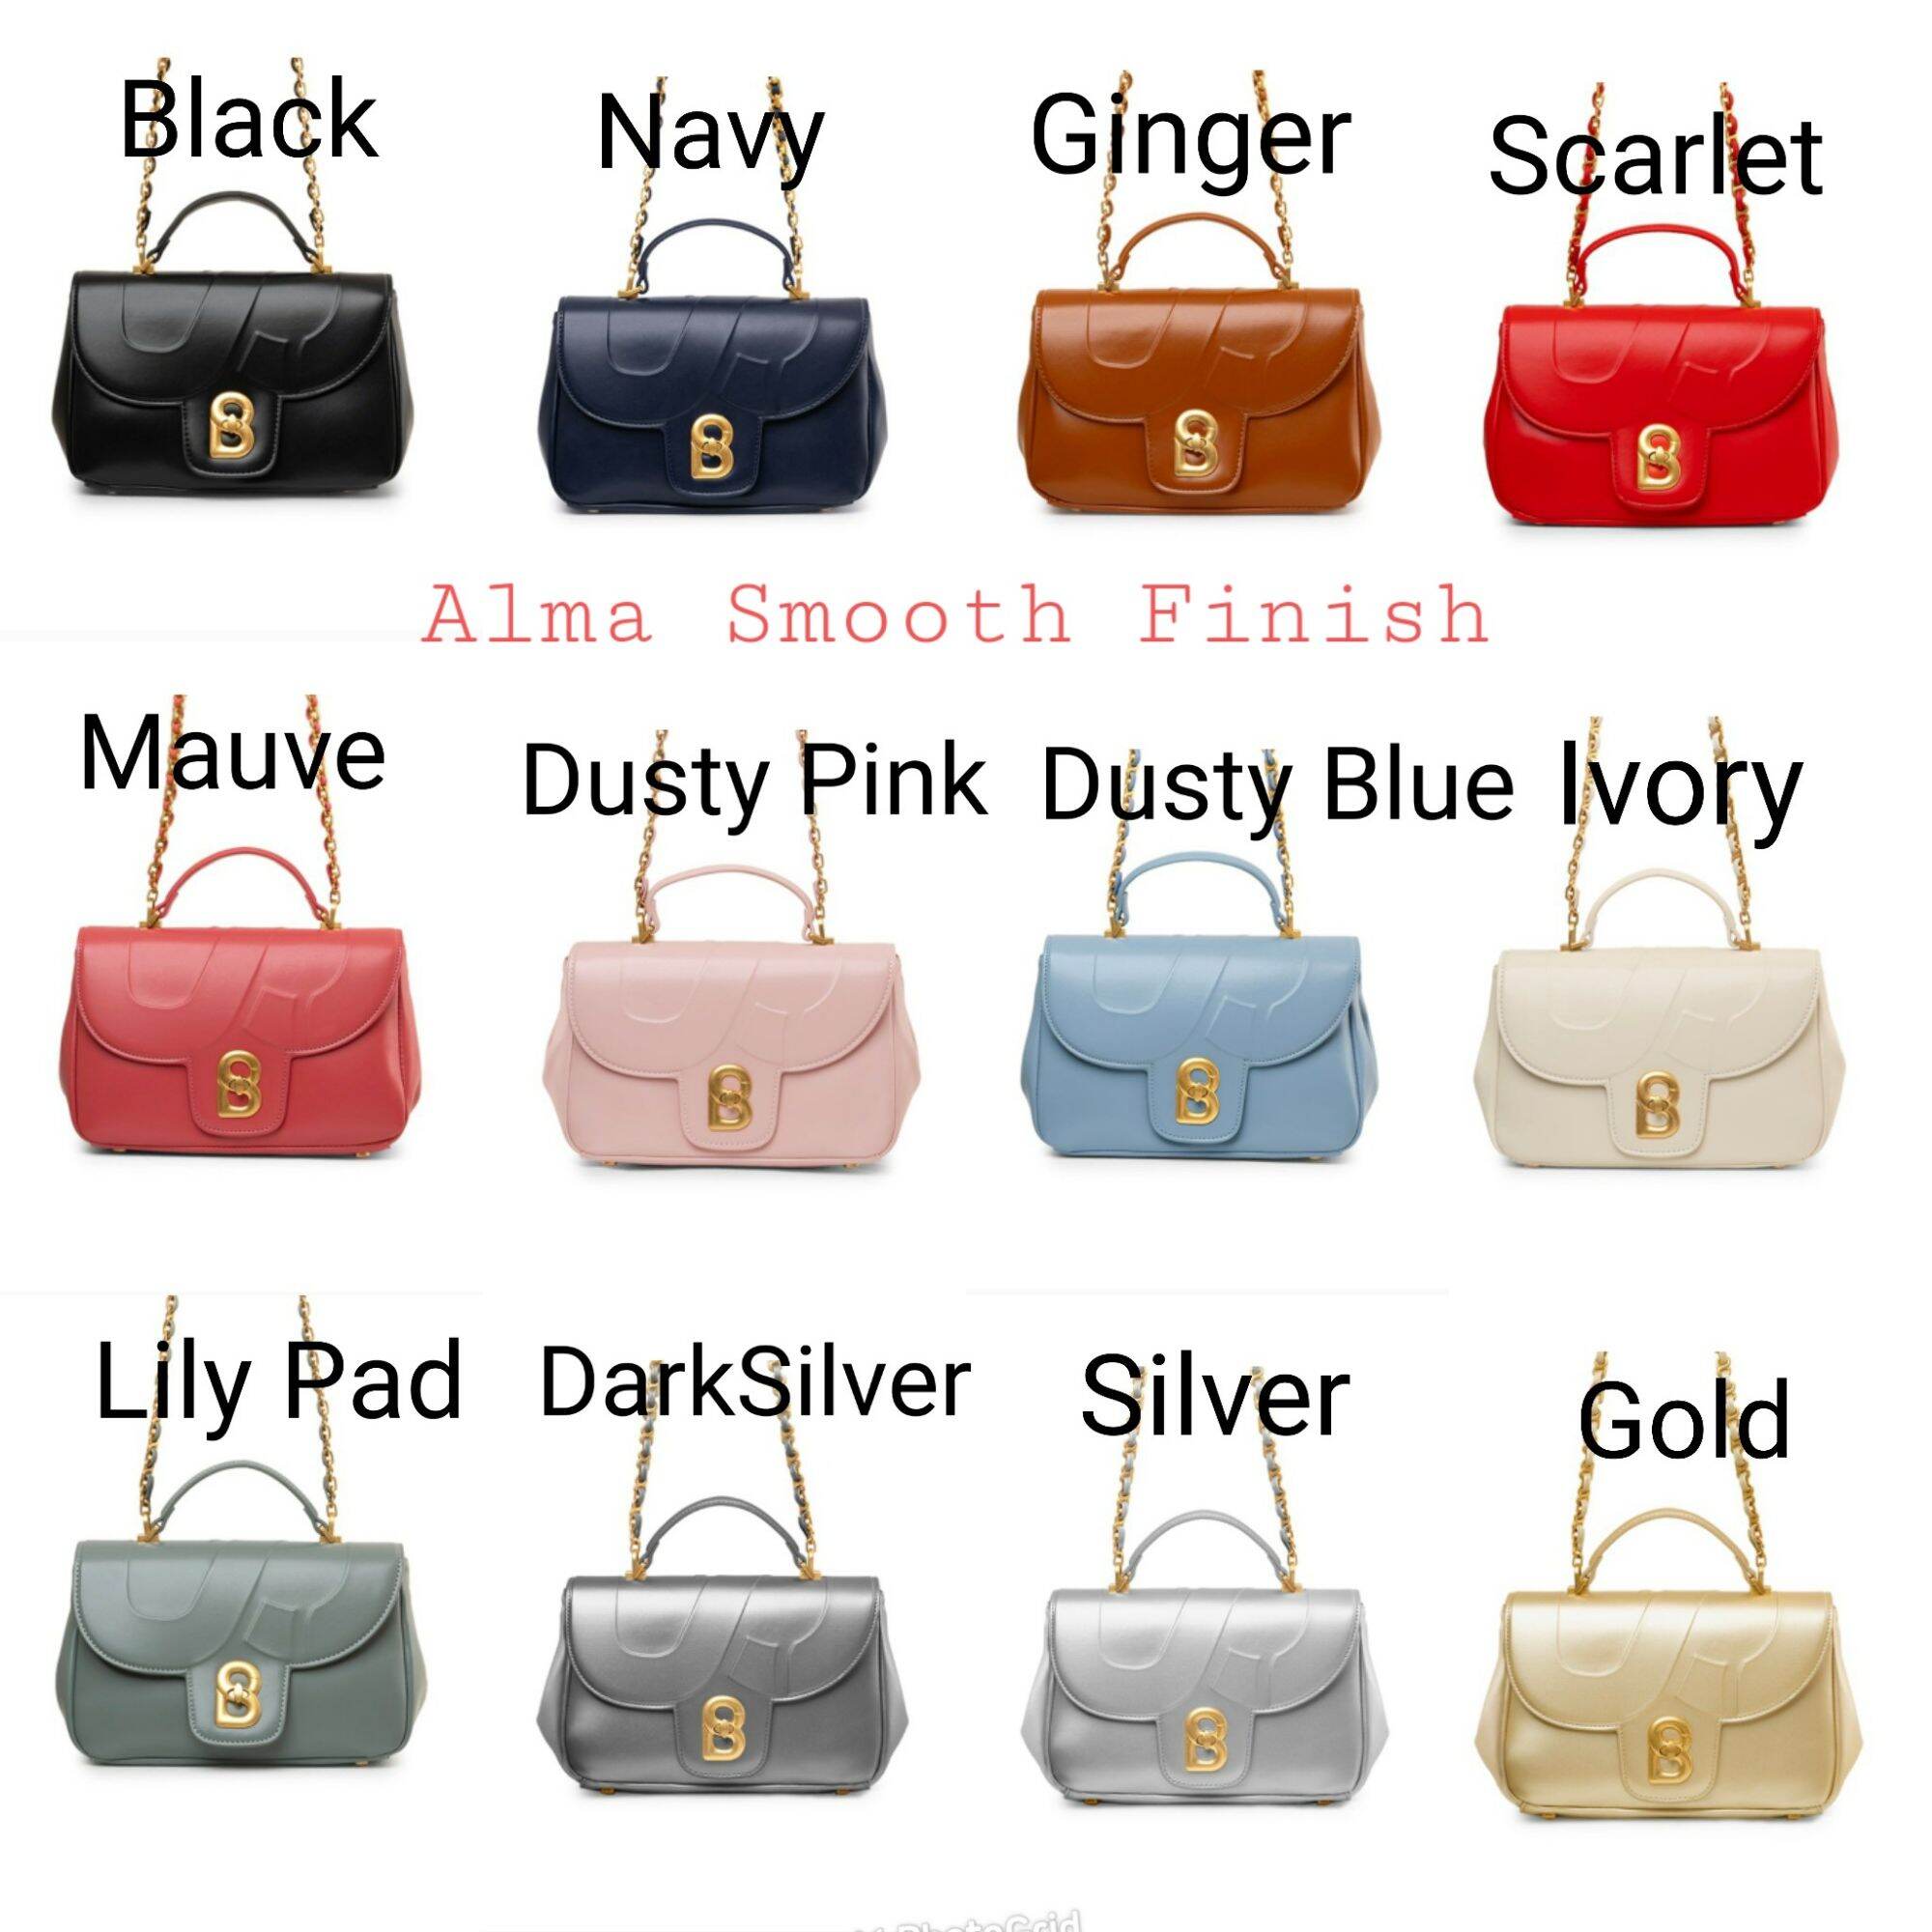 Alma Emily Flap Bag Buttonscarves